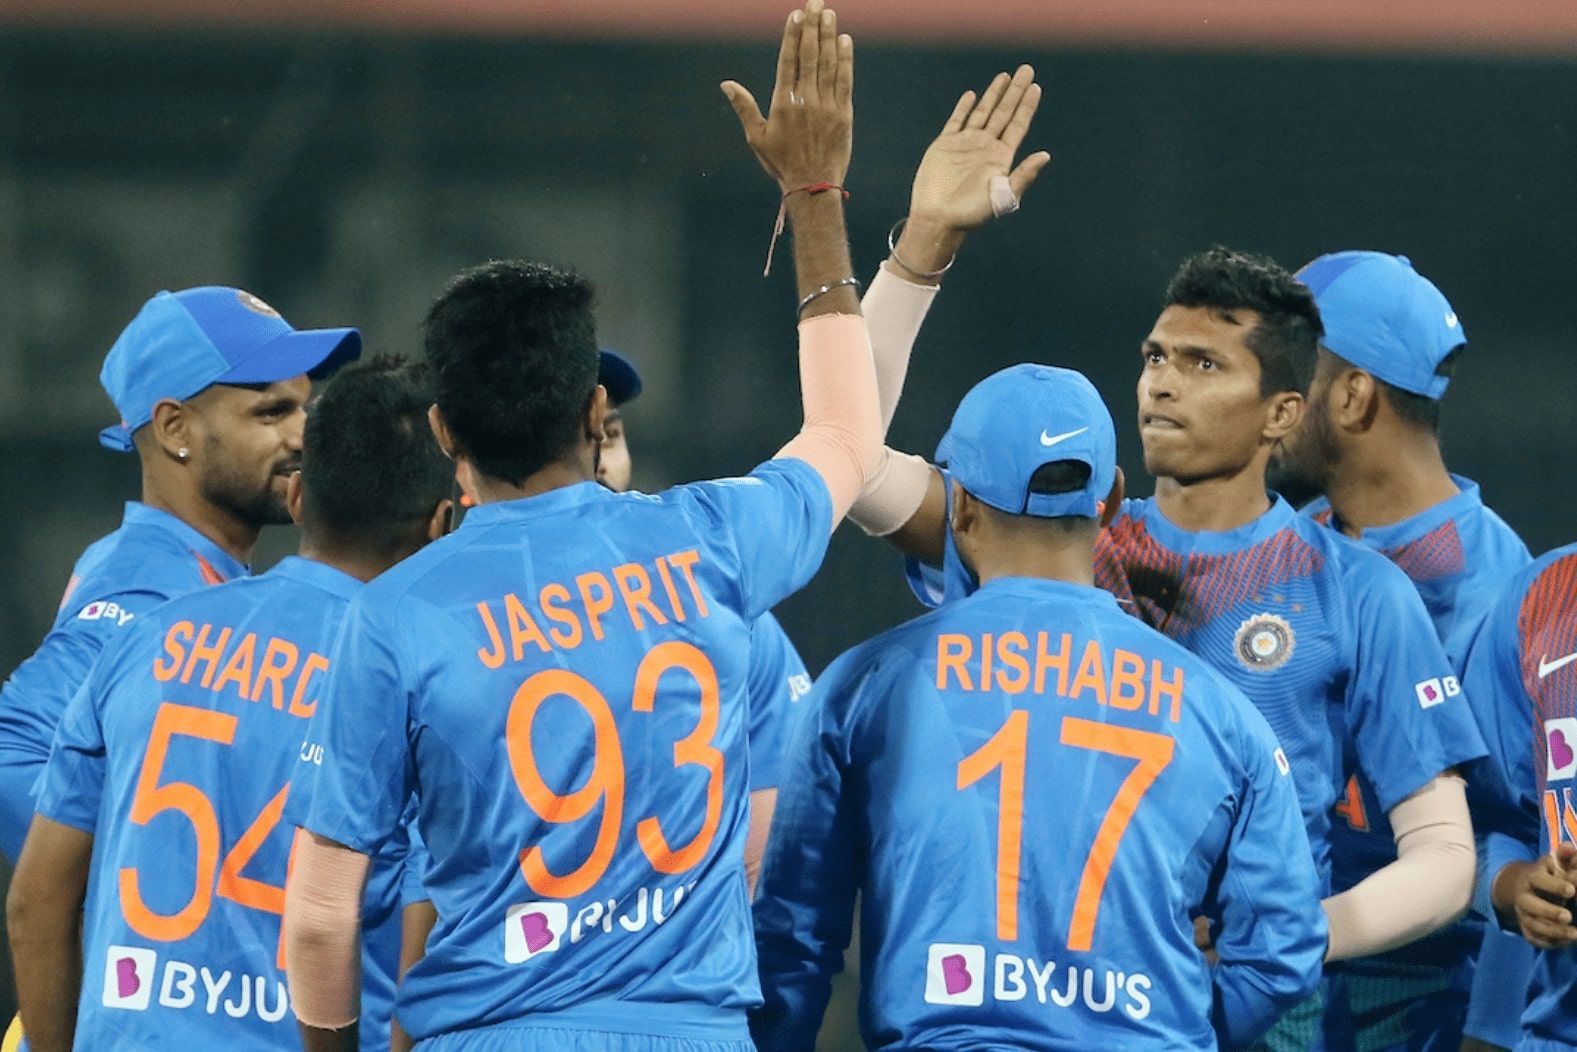 India defeated Sri Lanka by 7 wickets